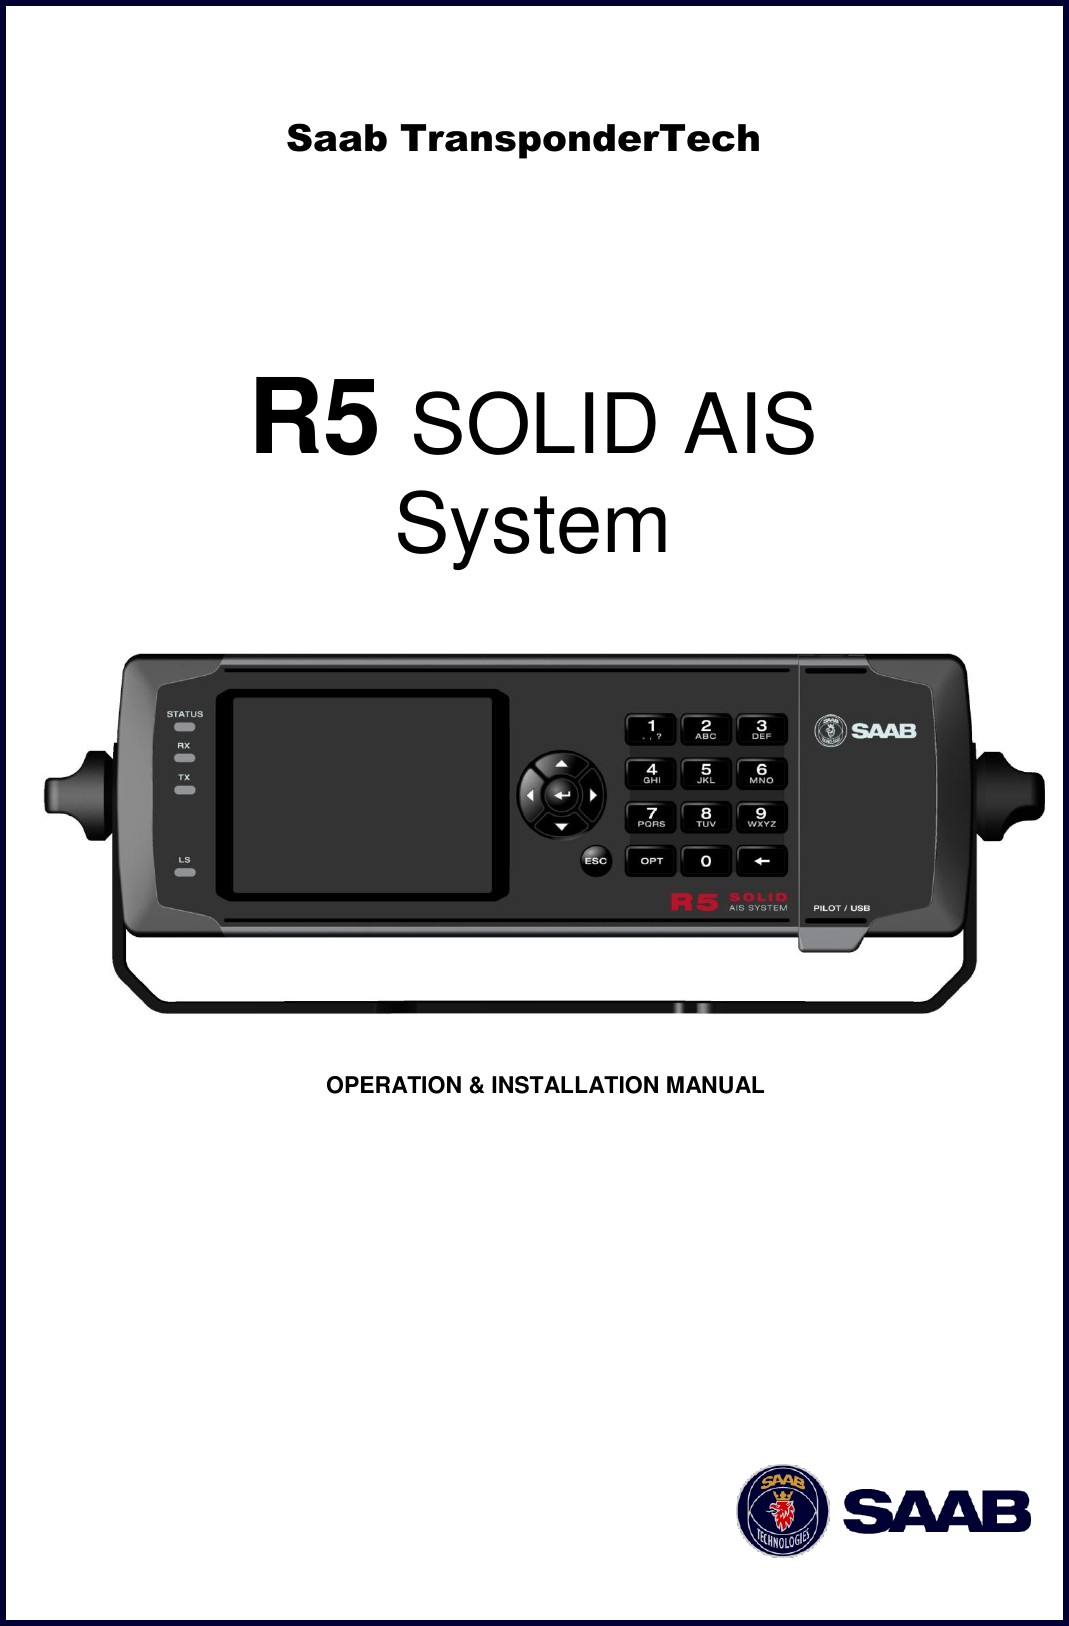                    OPERATION &amp; INSTALLATION MANUAL           Saab TransponderTech R5 SOLID AIS  System 